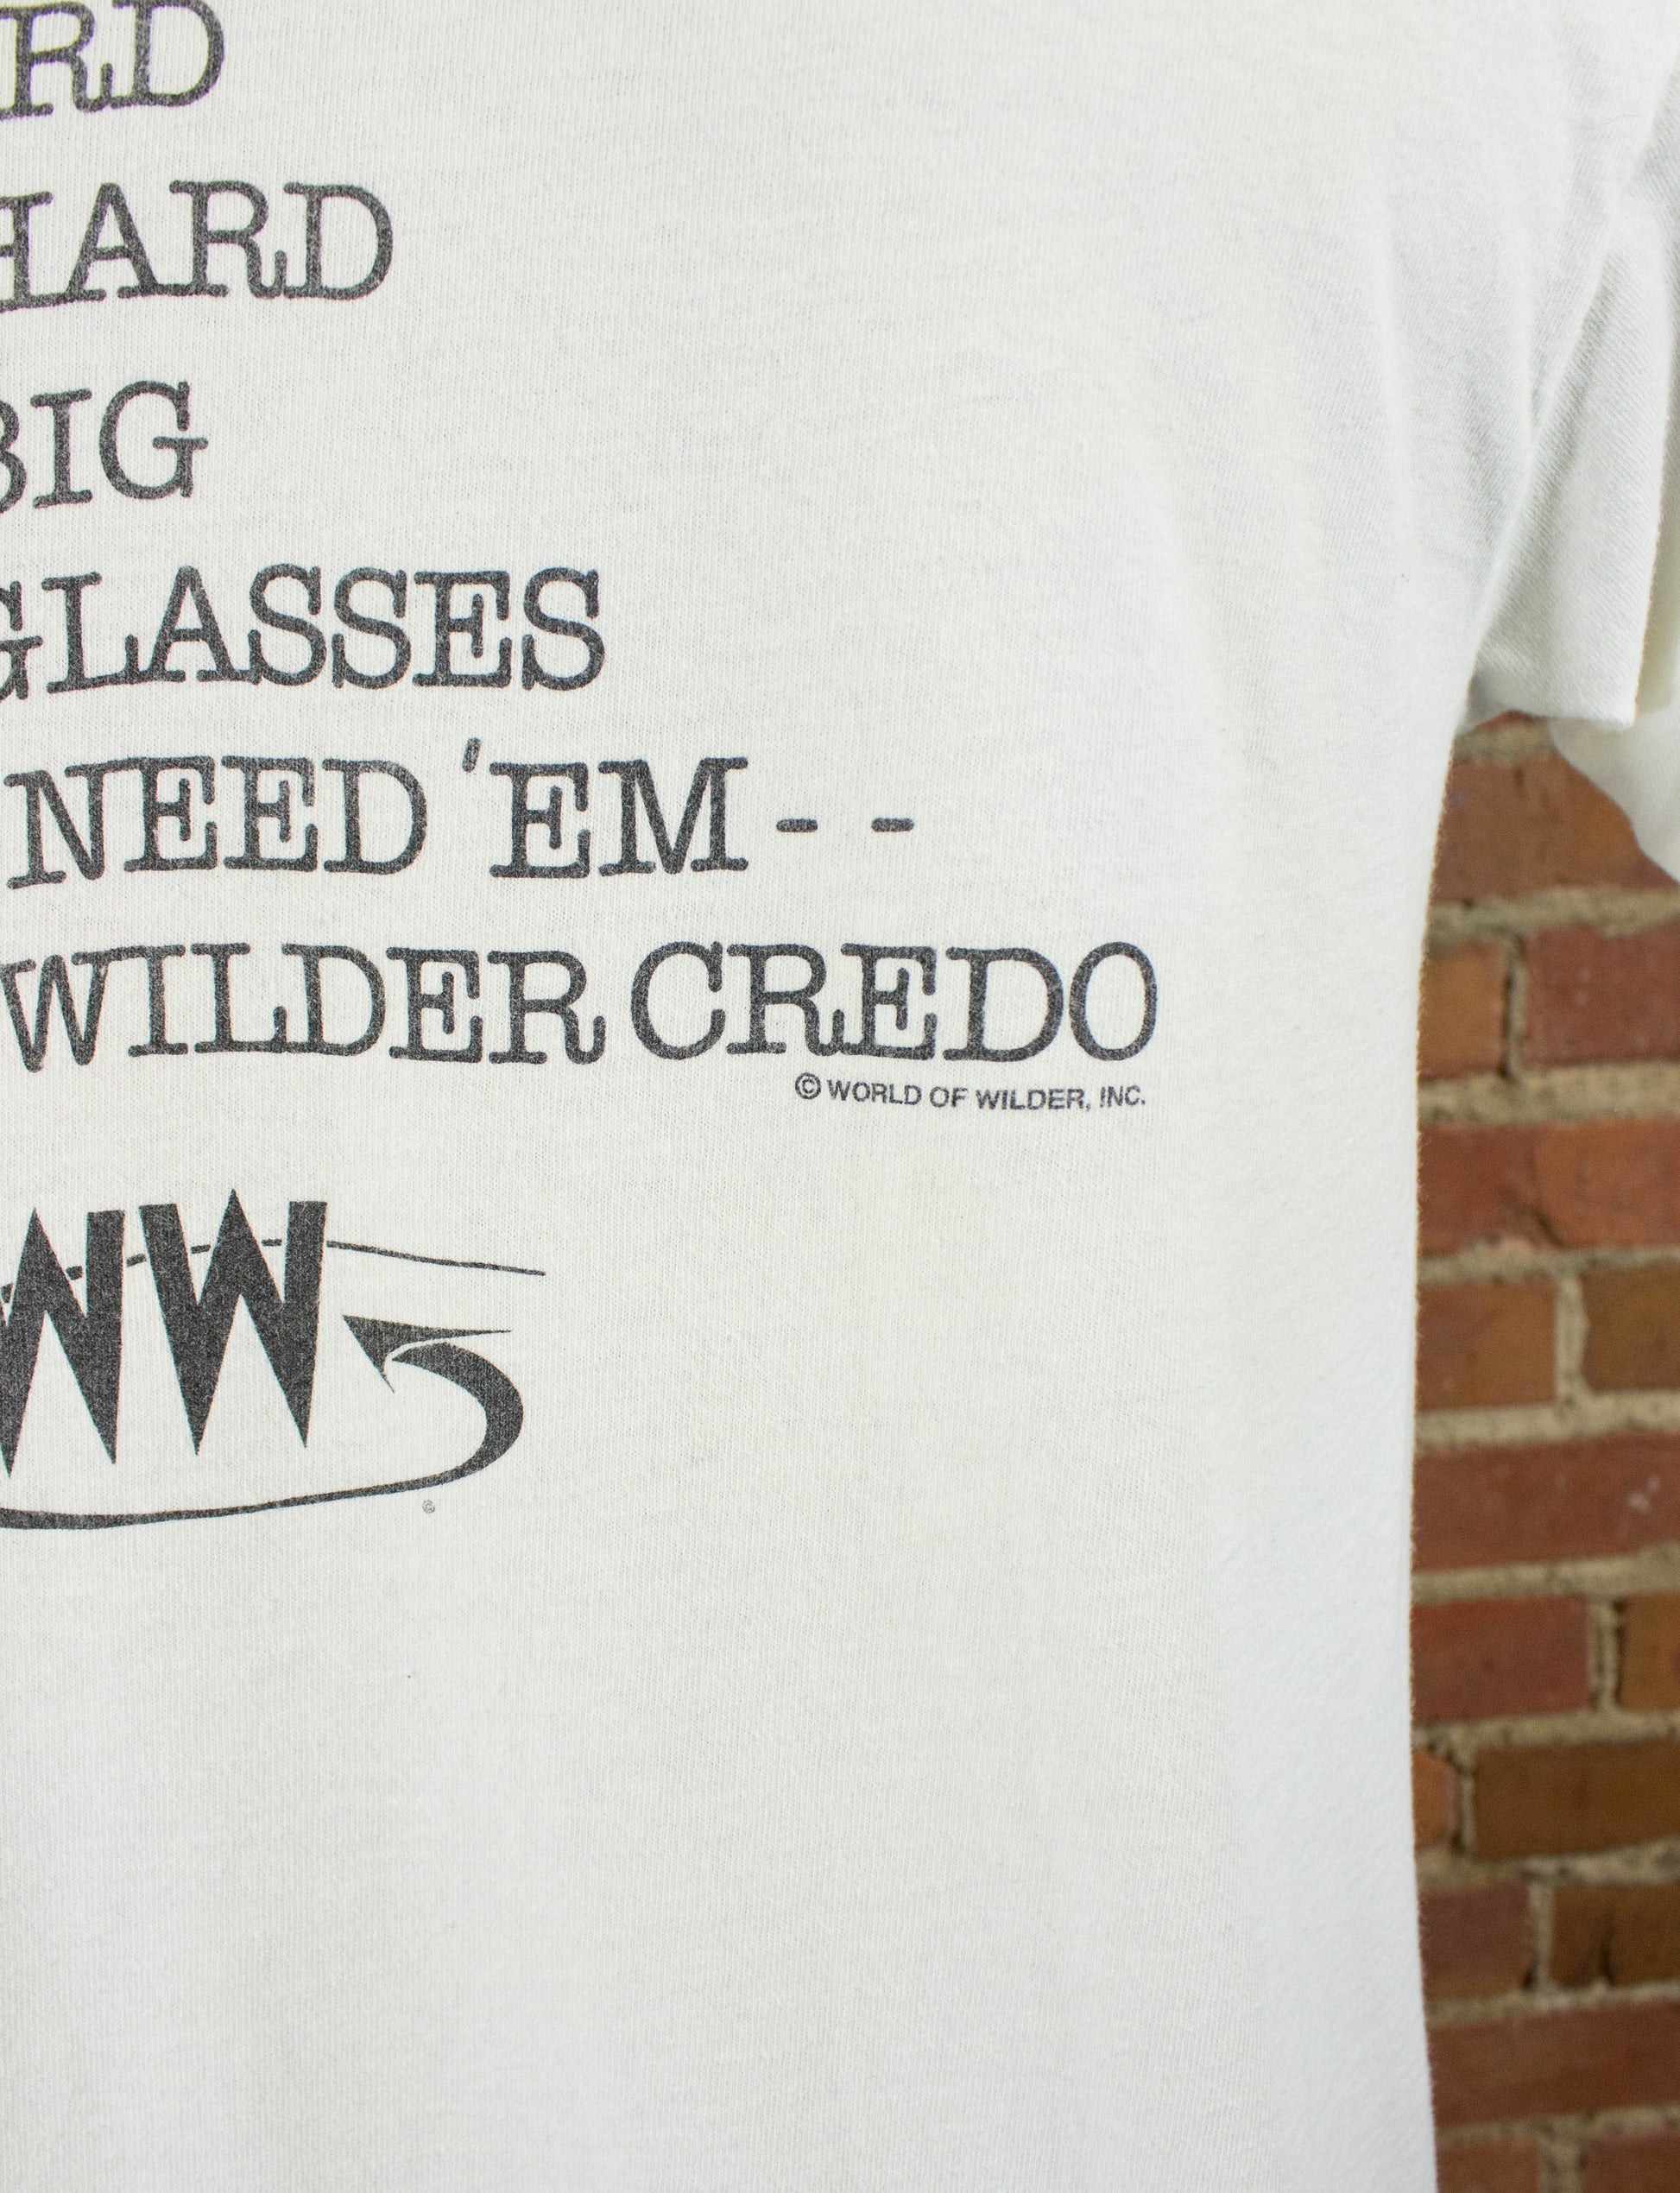 Webb Wilder 1991 Doo Dad White Concert T Shirt Unisex Large